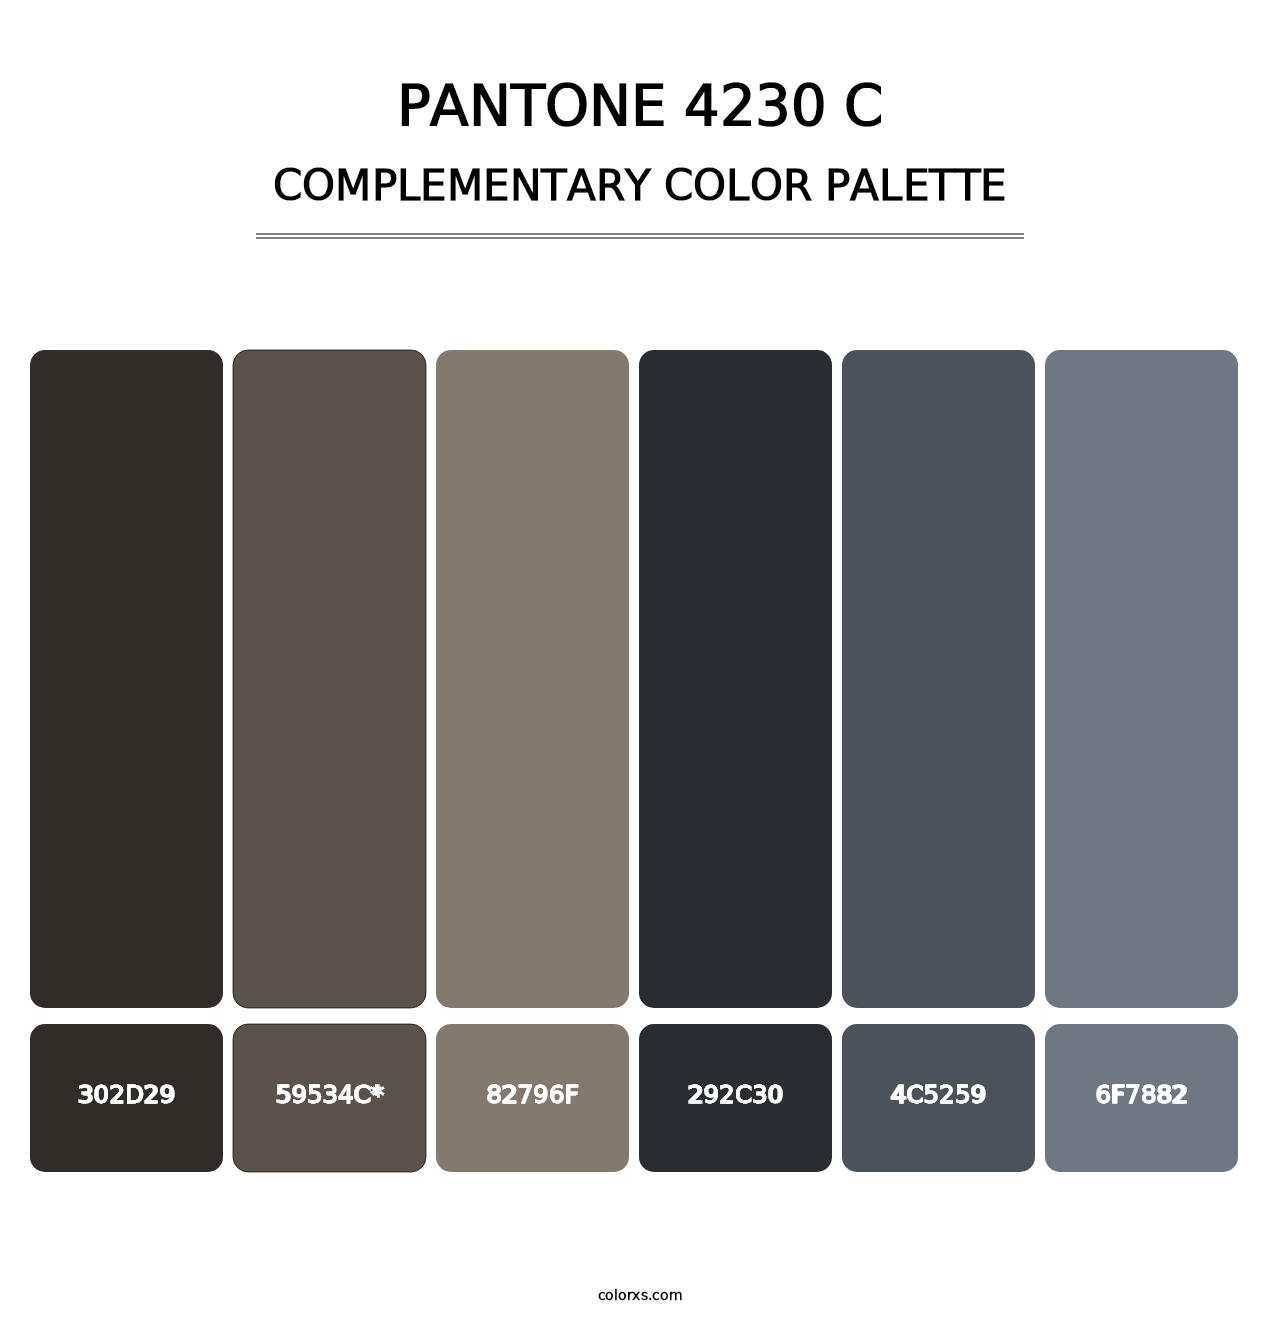 PANTONE 4230 C - Complementary Color Palette